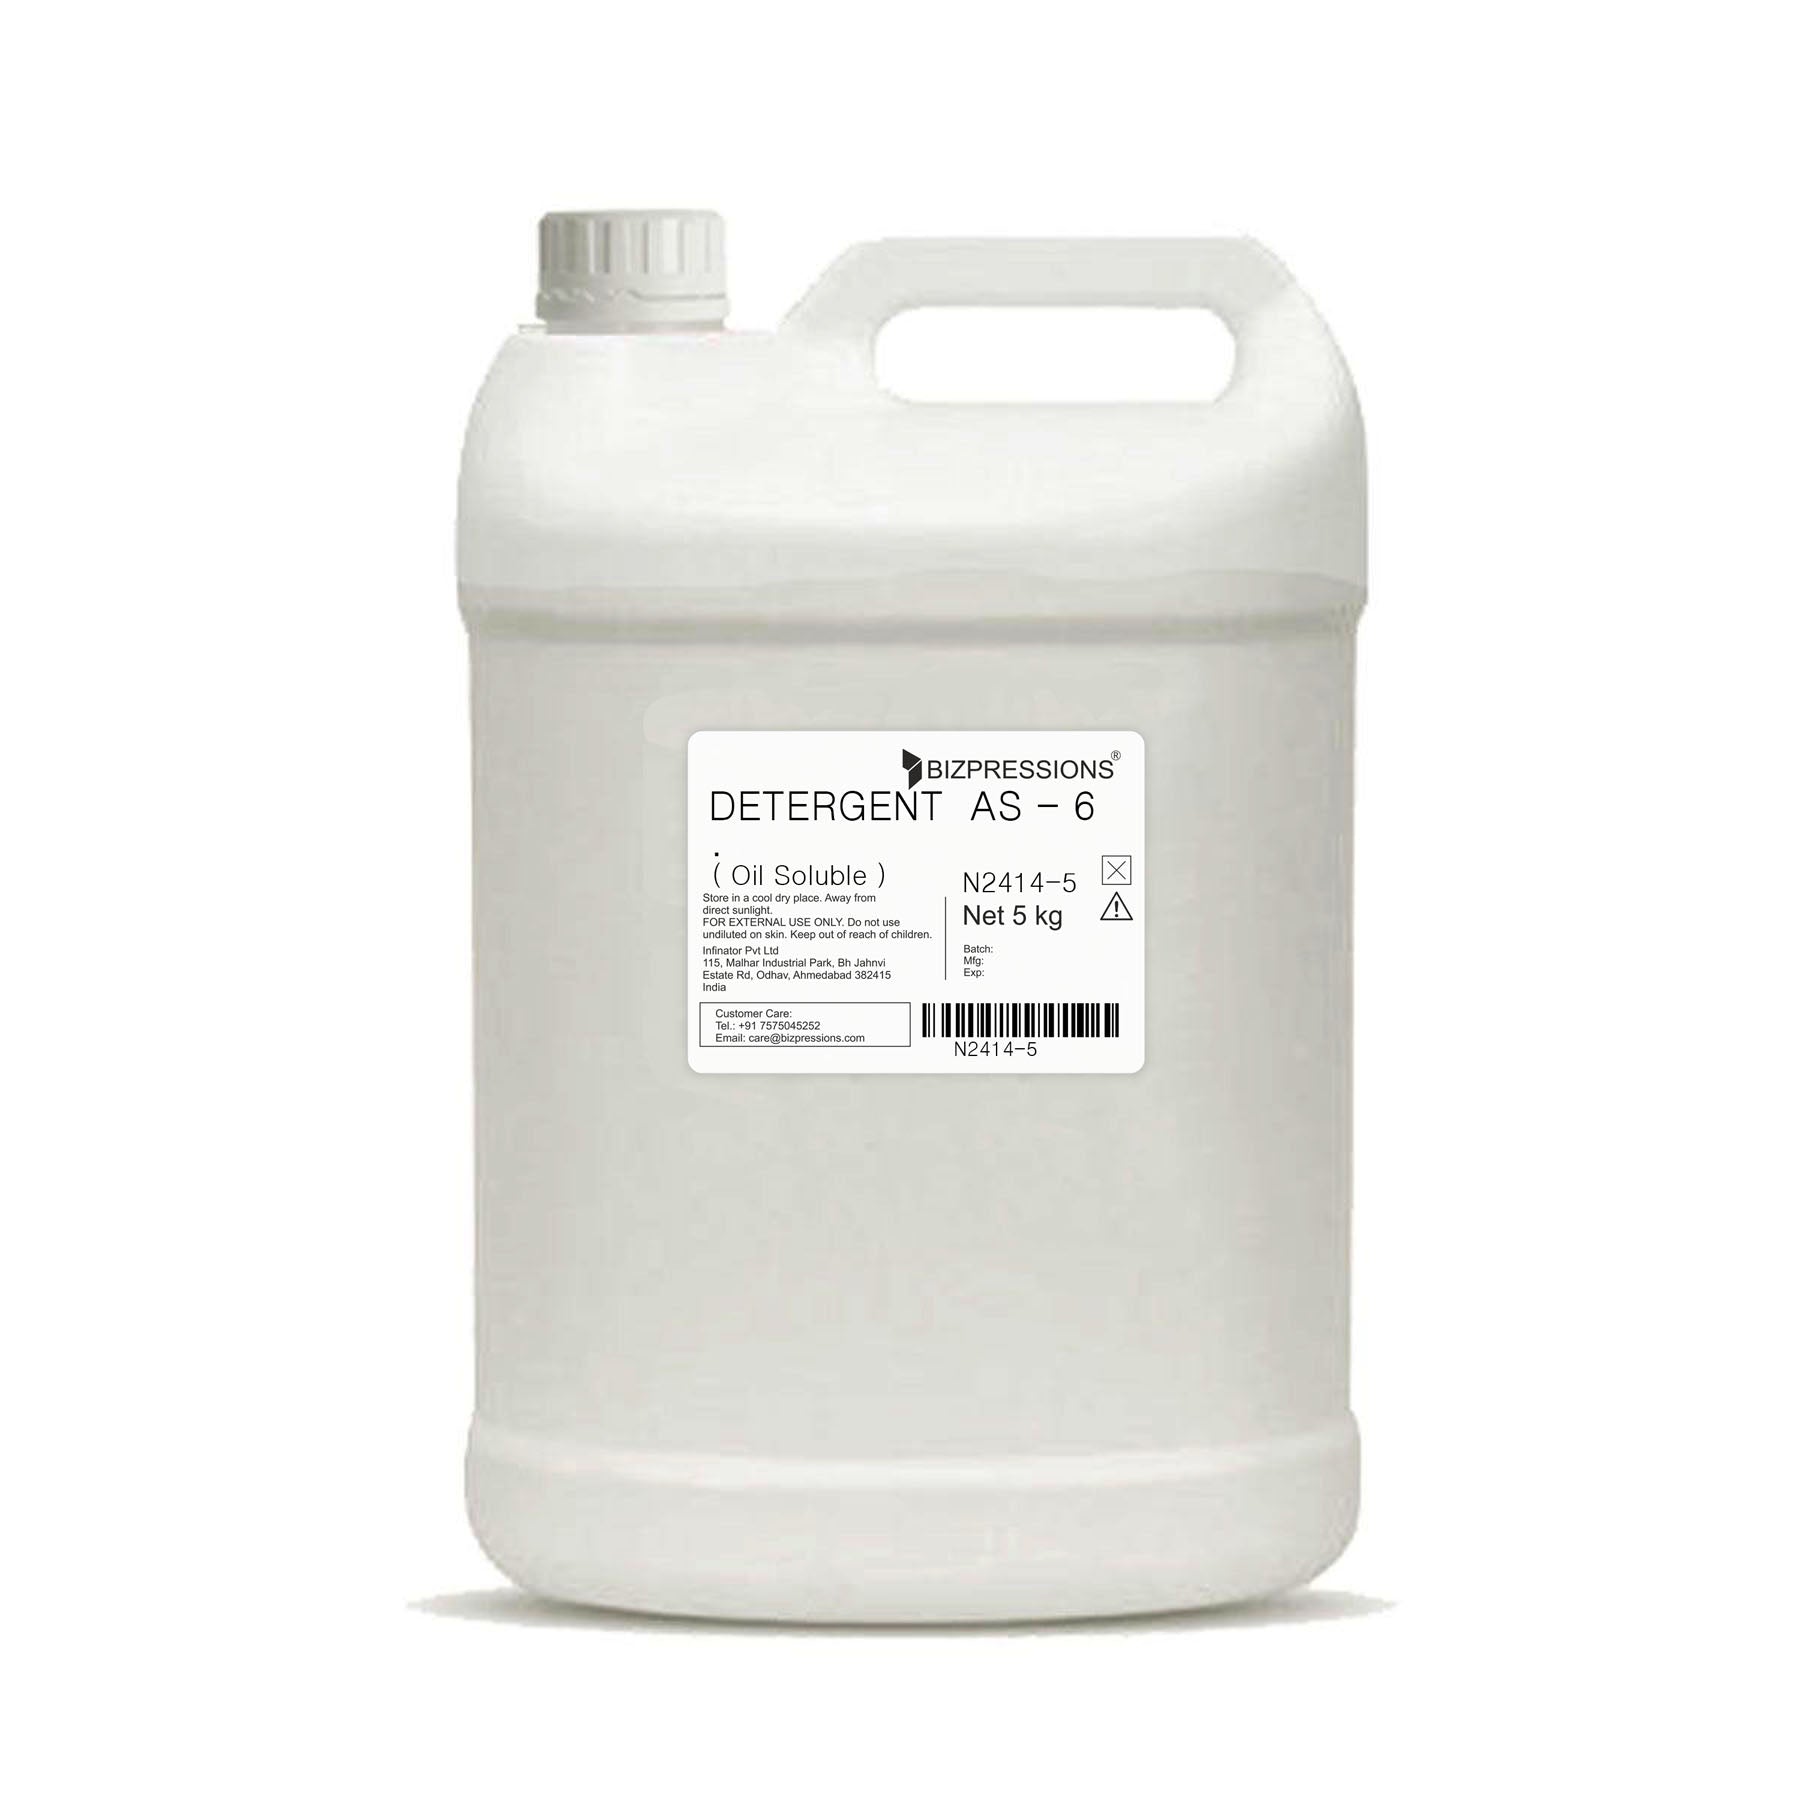 DETERGENT AS - 6 - Fragrance ( Oil Soluble ) - 5 kg